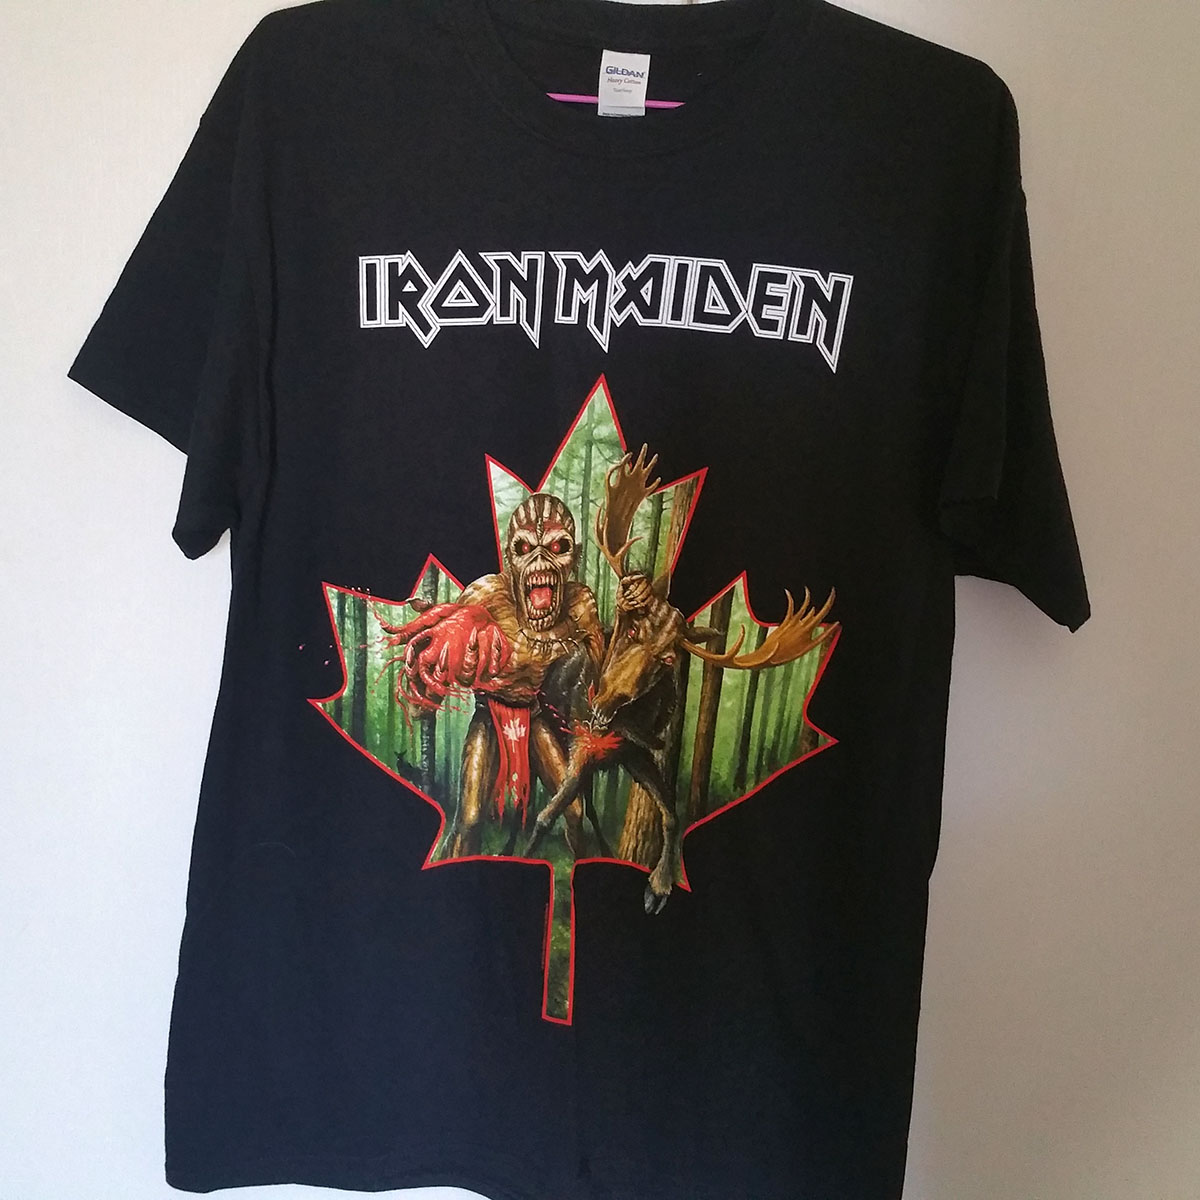 Iron Maiden - 2016 Canada Event - Iron Maiden Collector